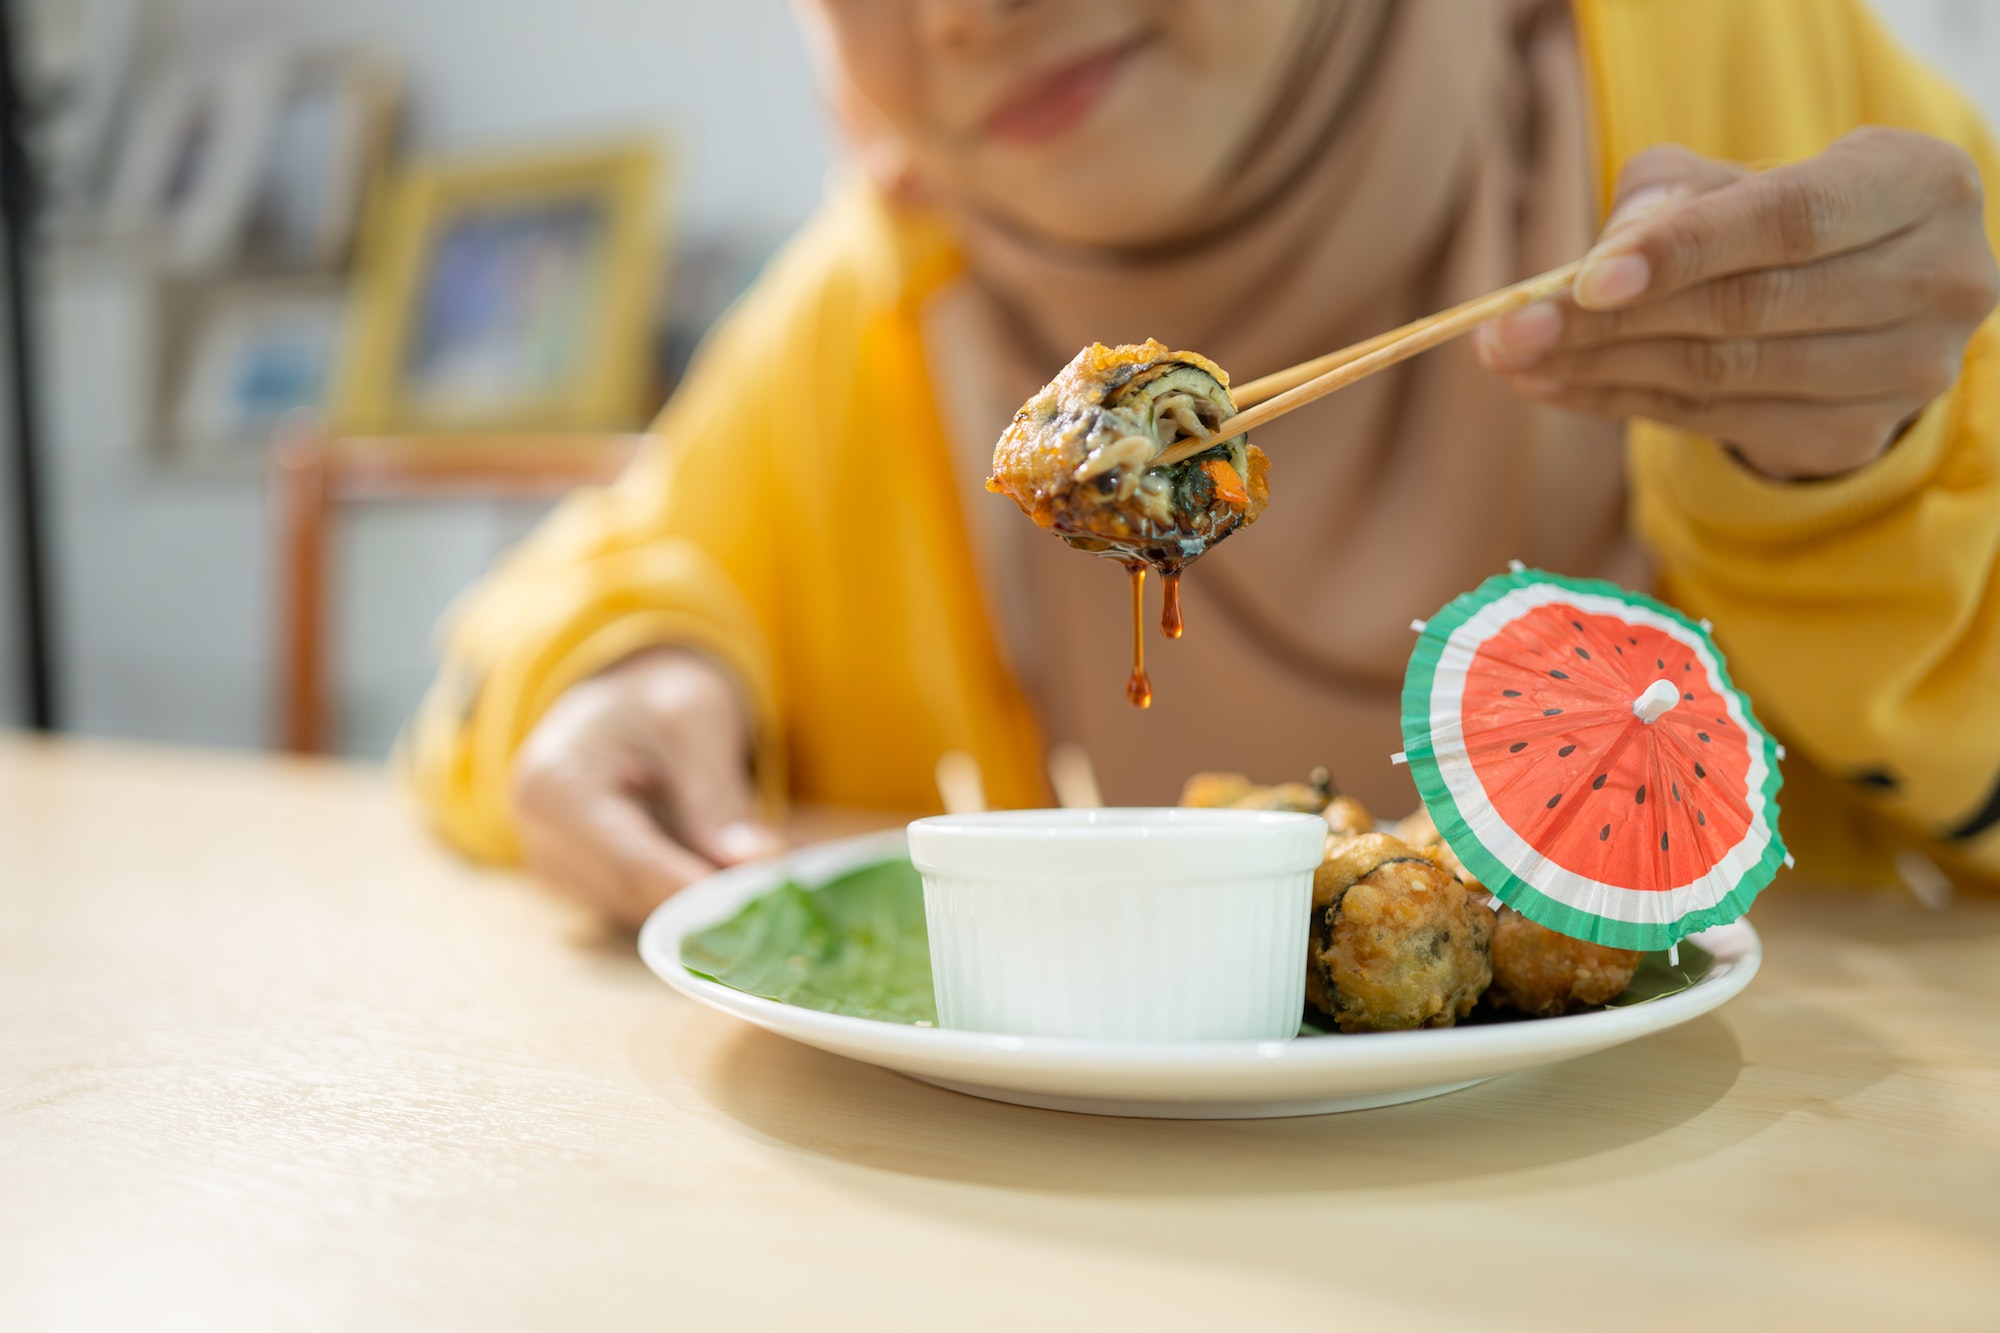 Muslim girl eating mushroom sushi at the restaurant. Selective focus on sushi